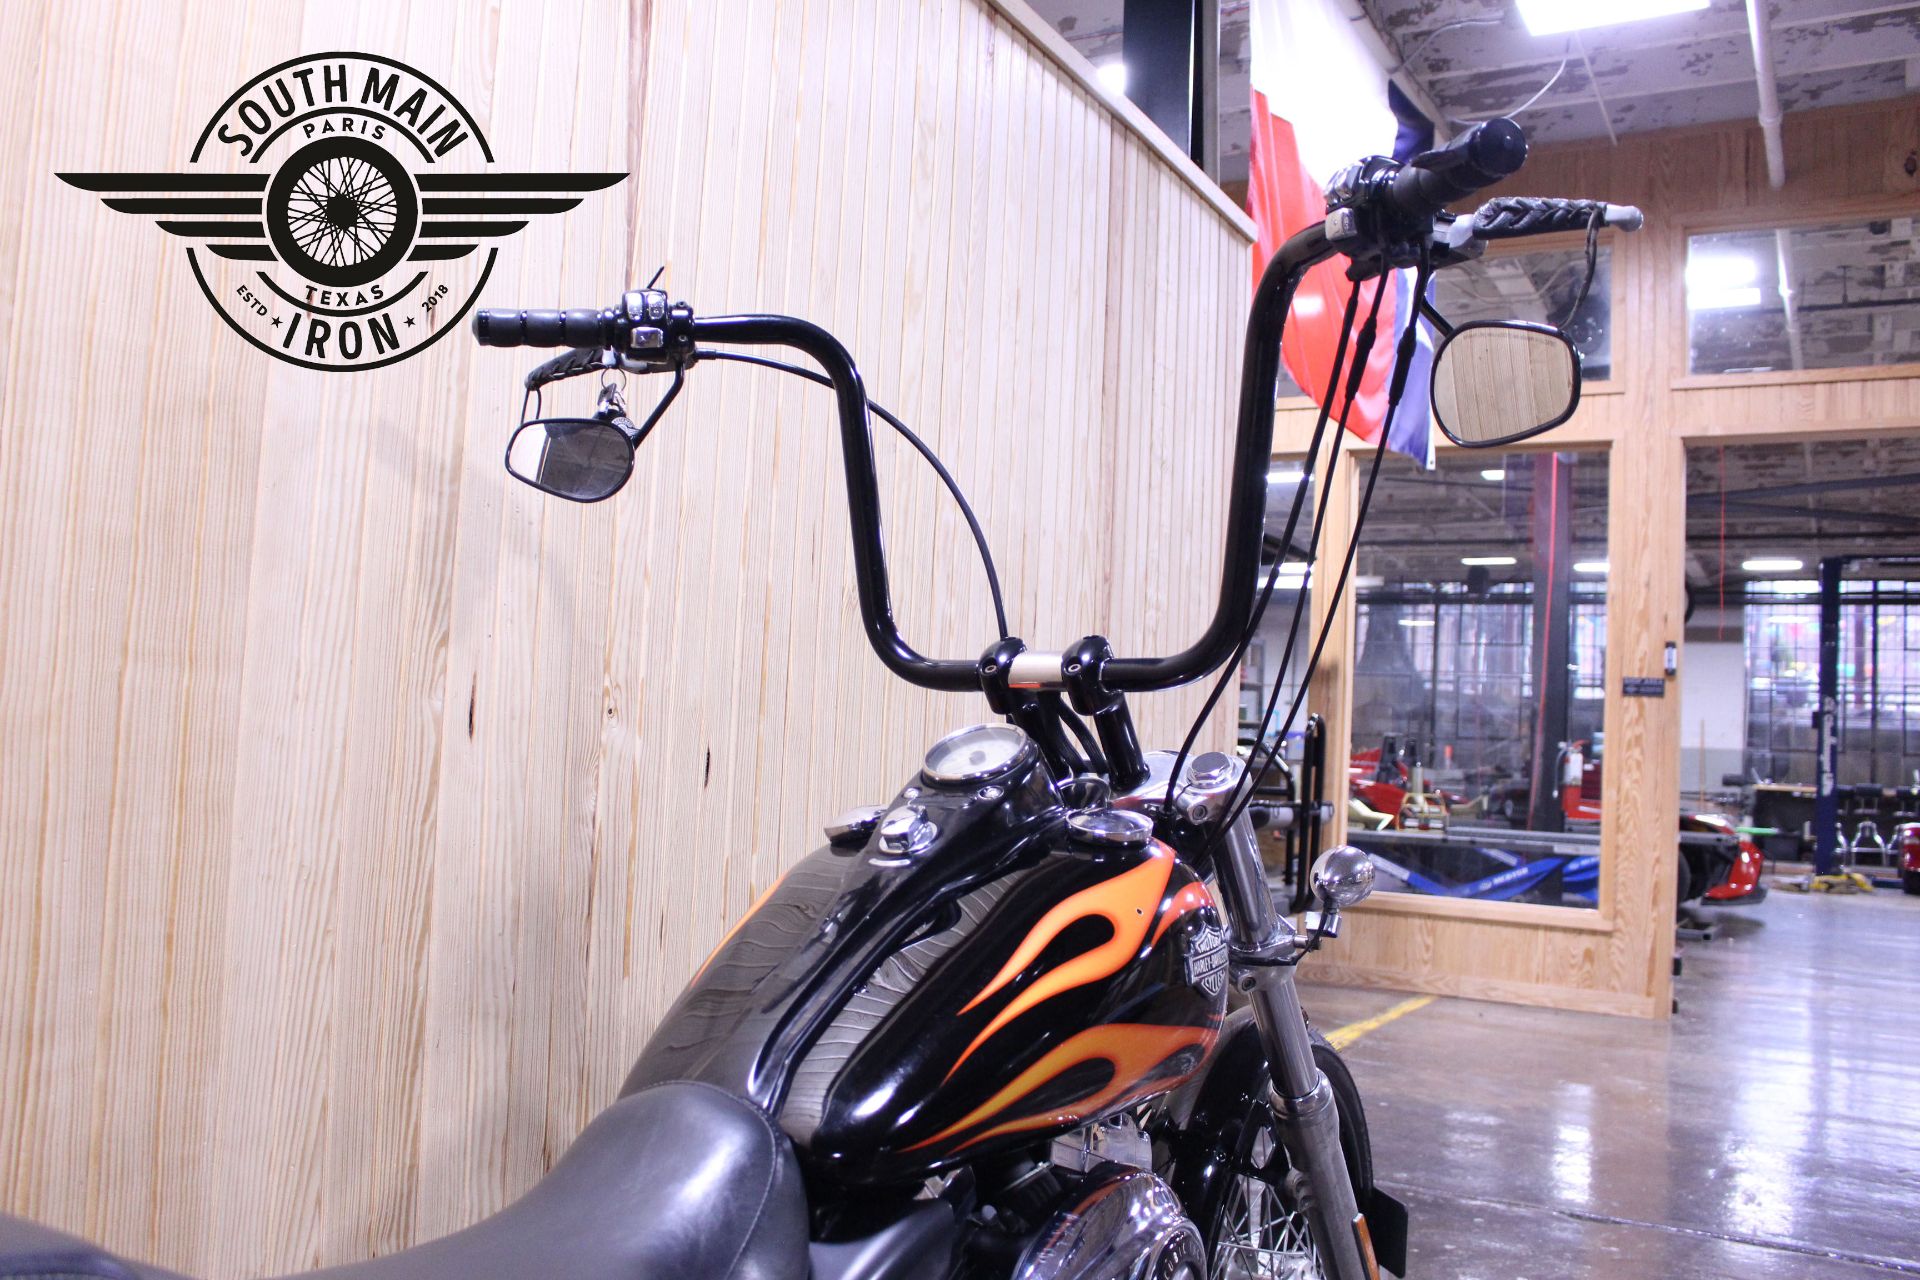 2011 Harley-Davidson Dyna® Wide Glide® in Paris, Texas - Photo 8